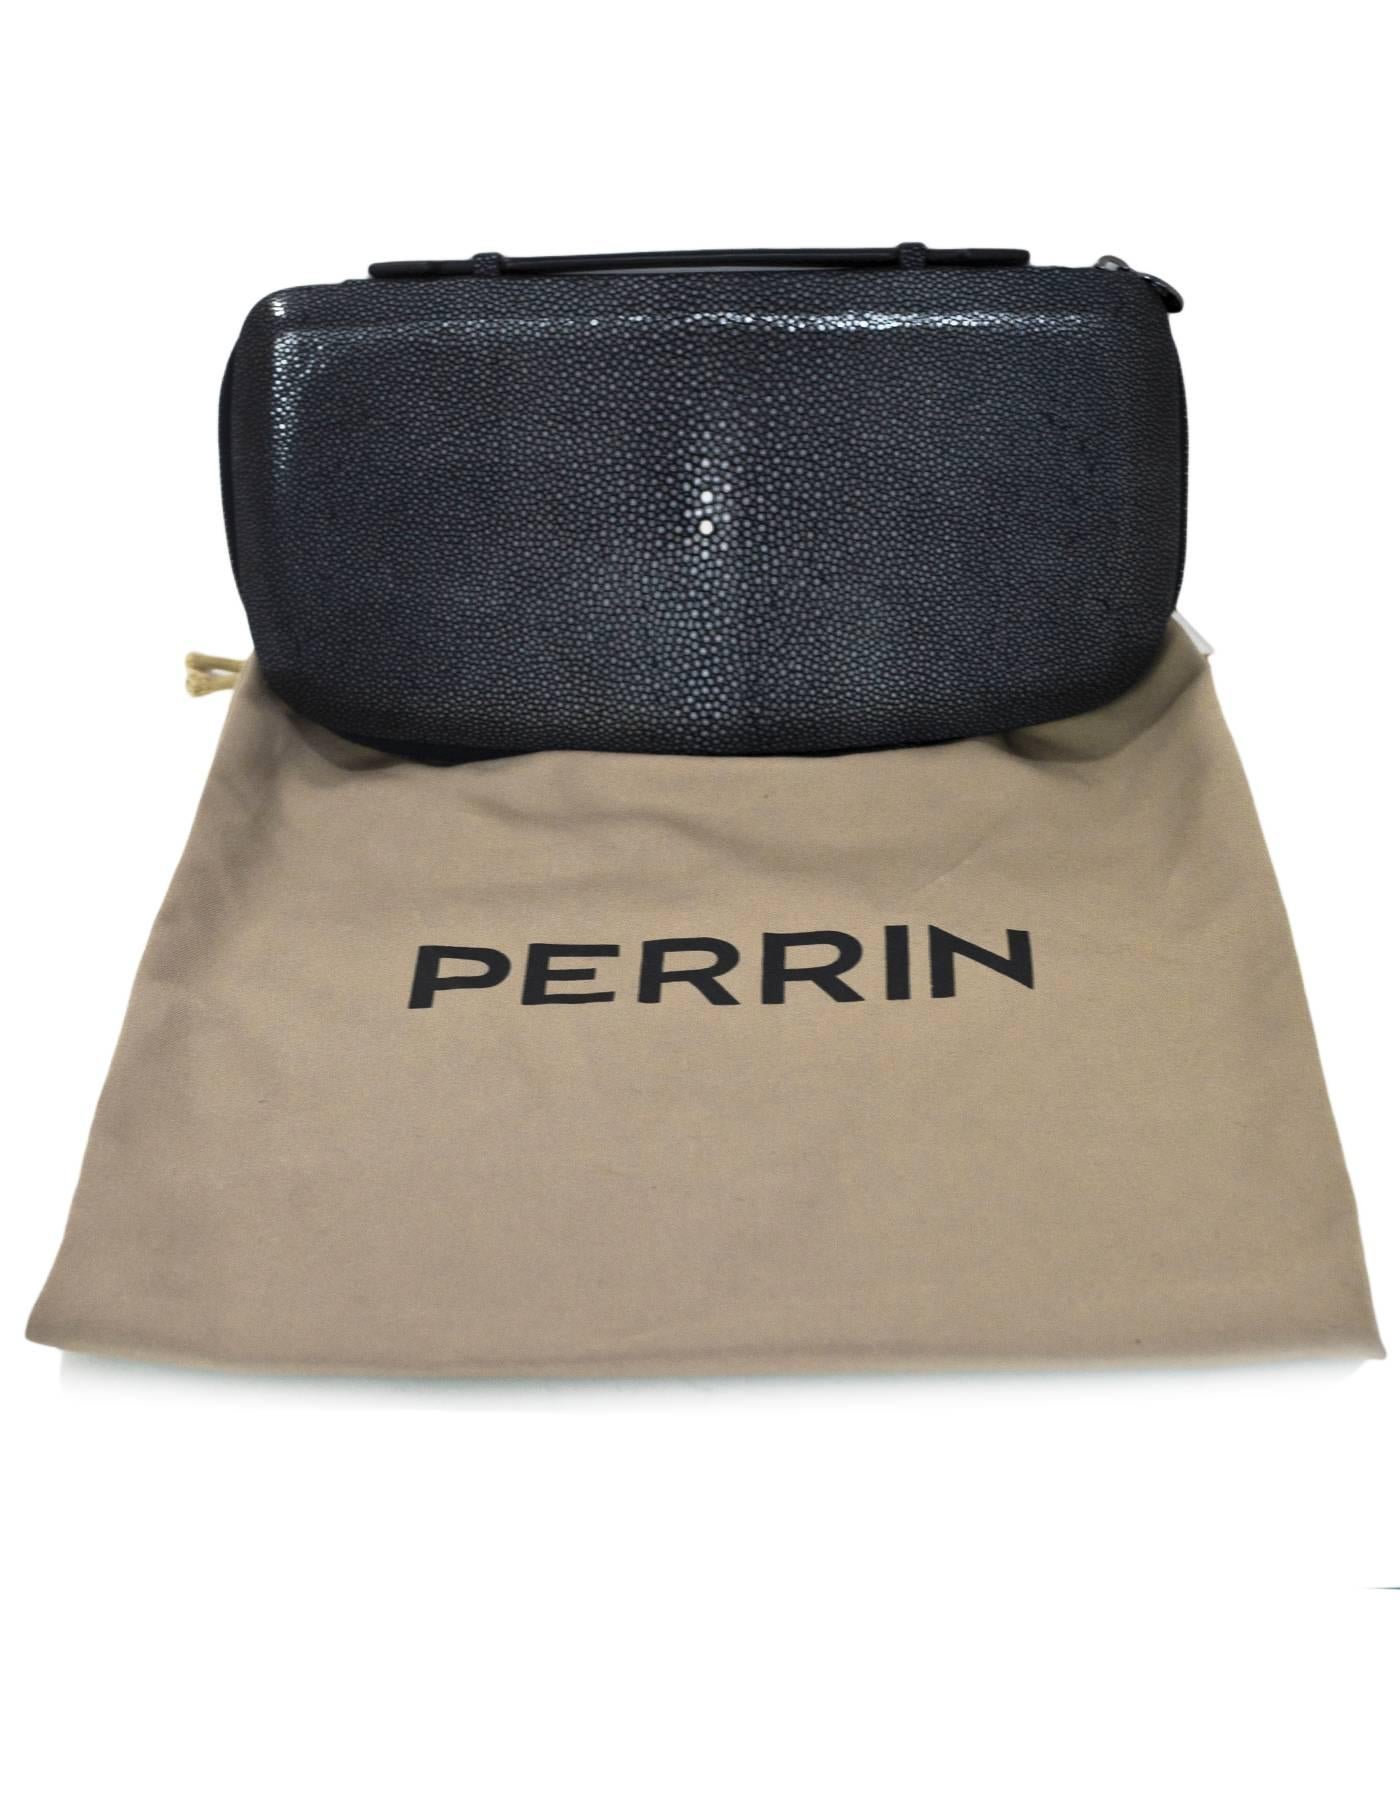 Perrin Black Stingray Le Martha Jet Set Organizer Clutch Bag with Dust Bag 5